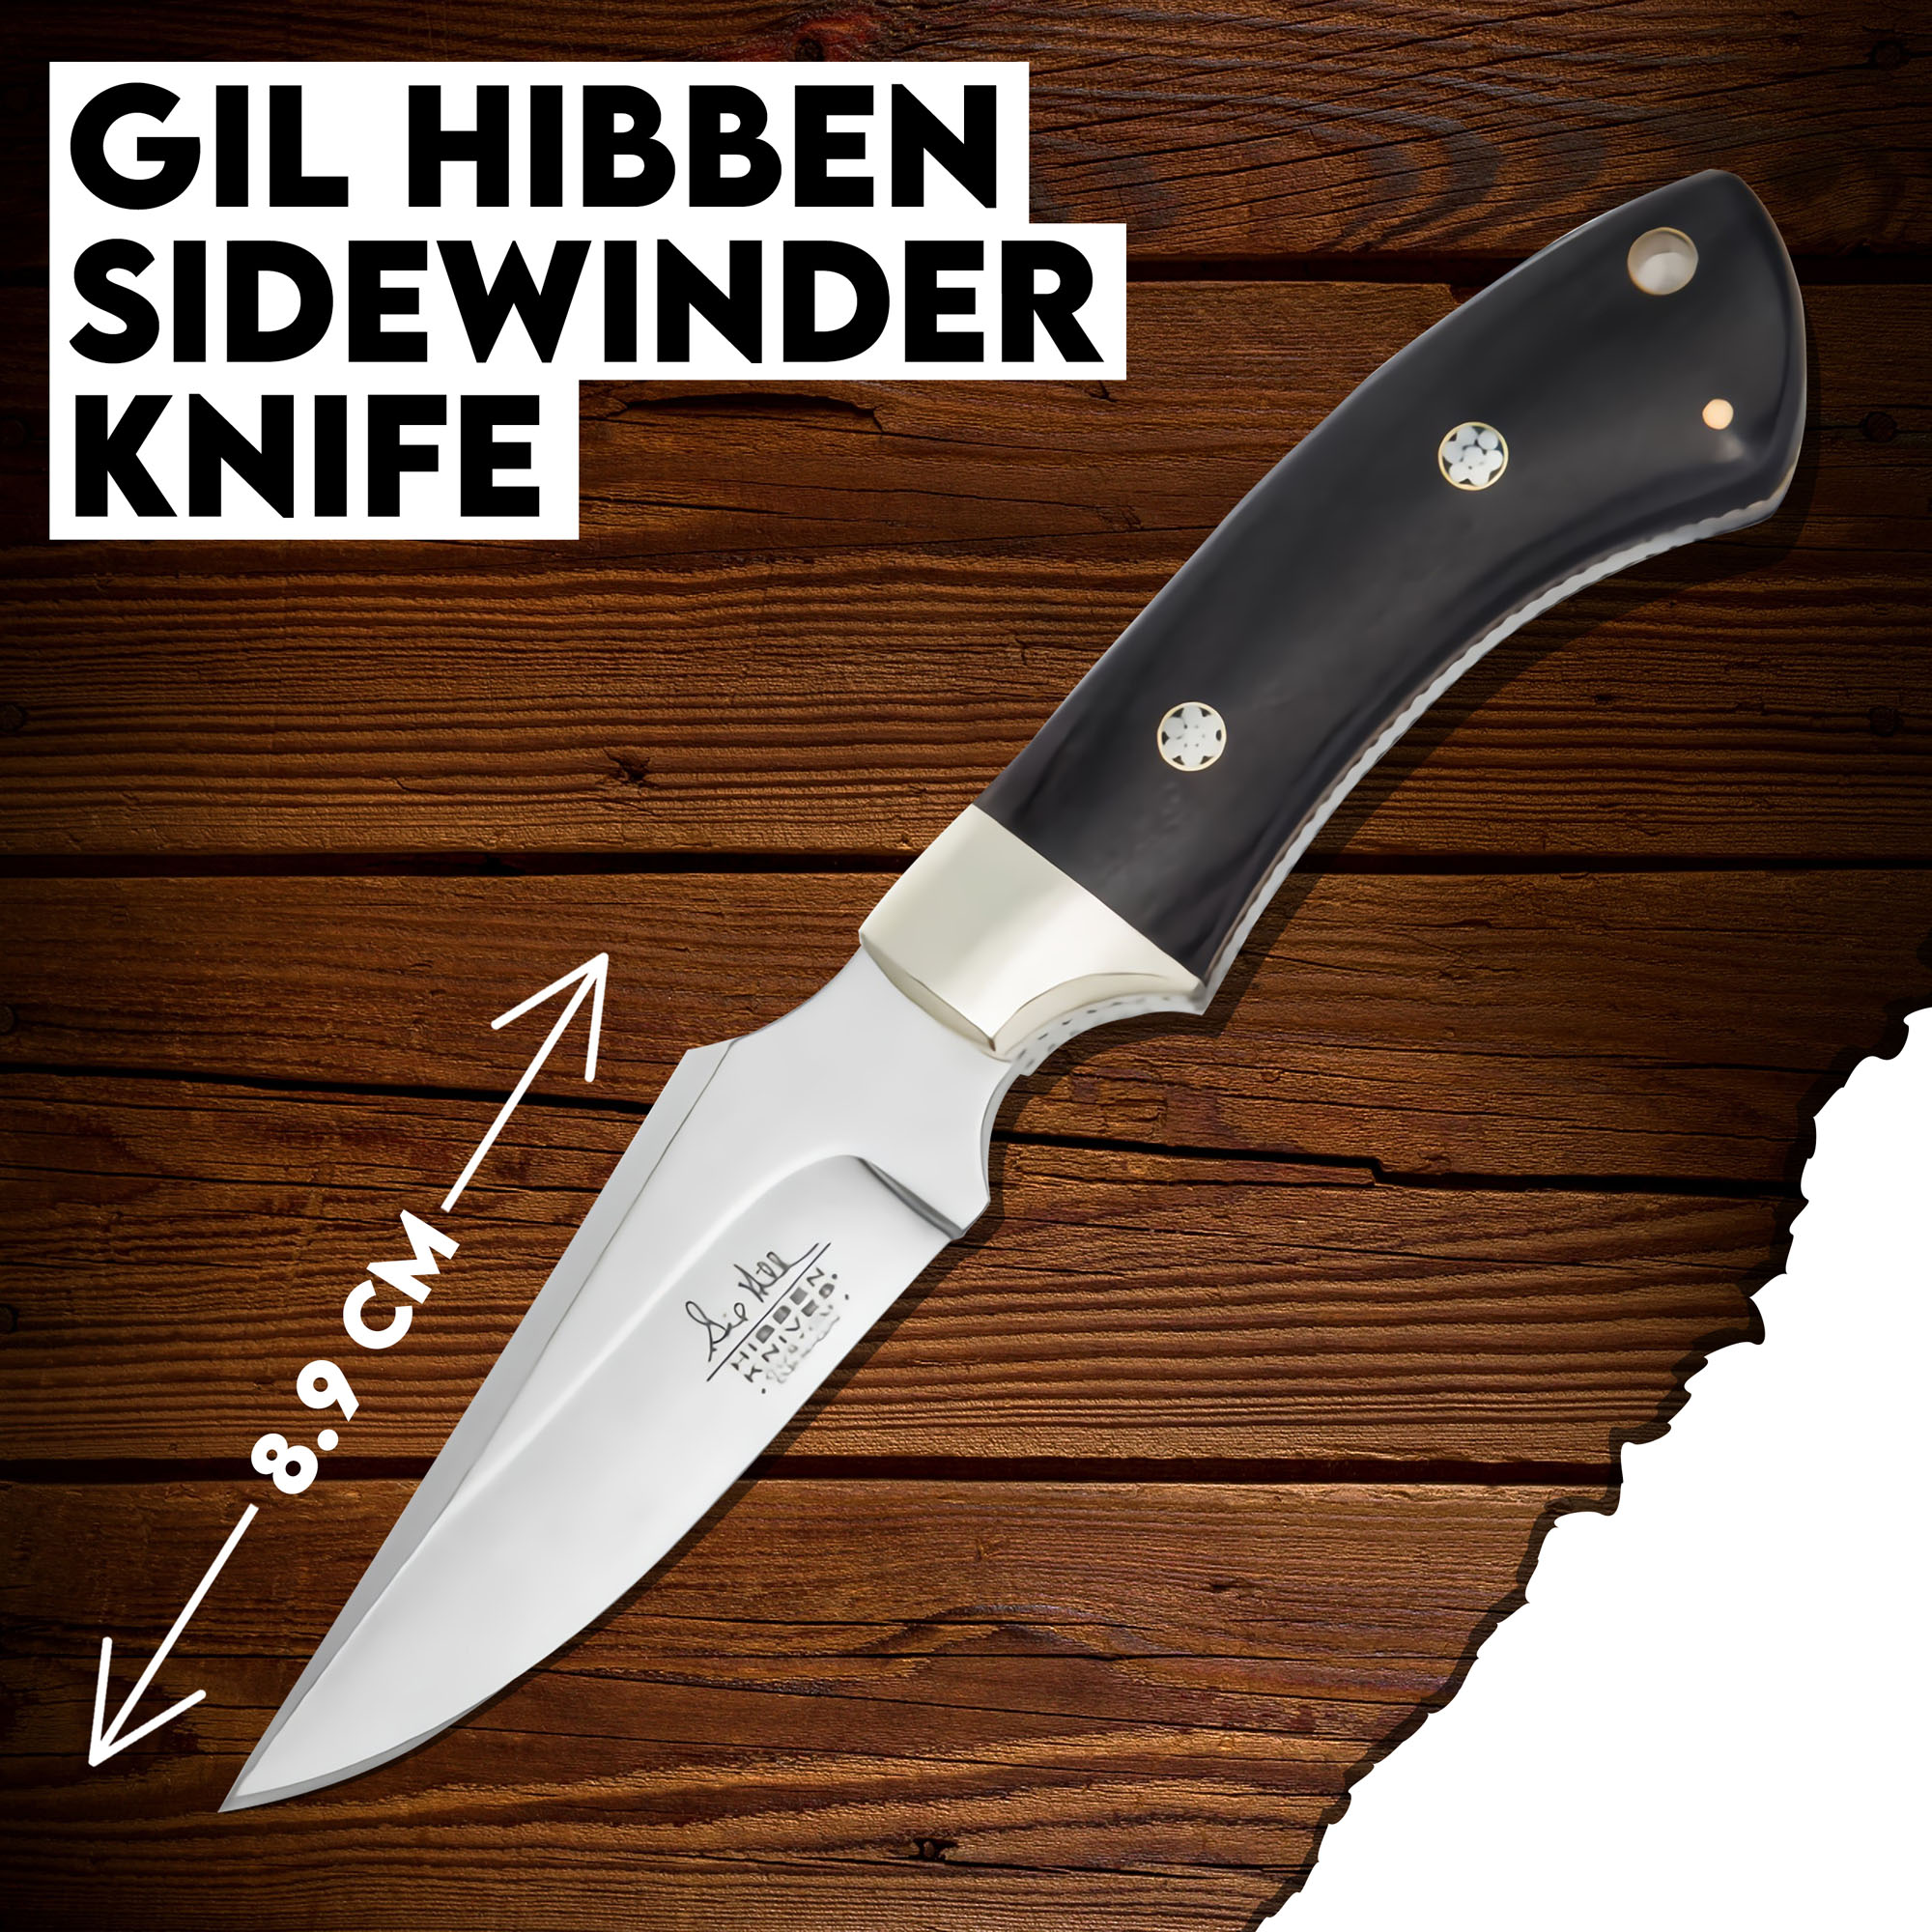 Gil Hibben Sidewinder Knife